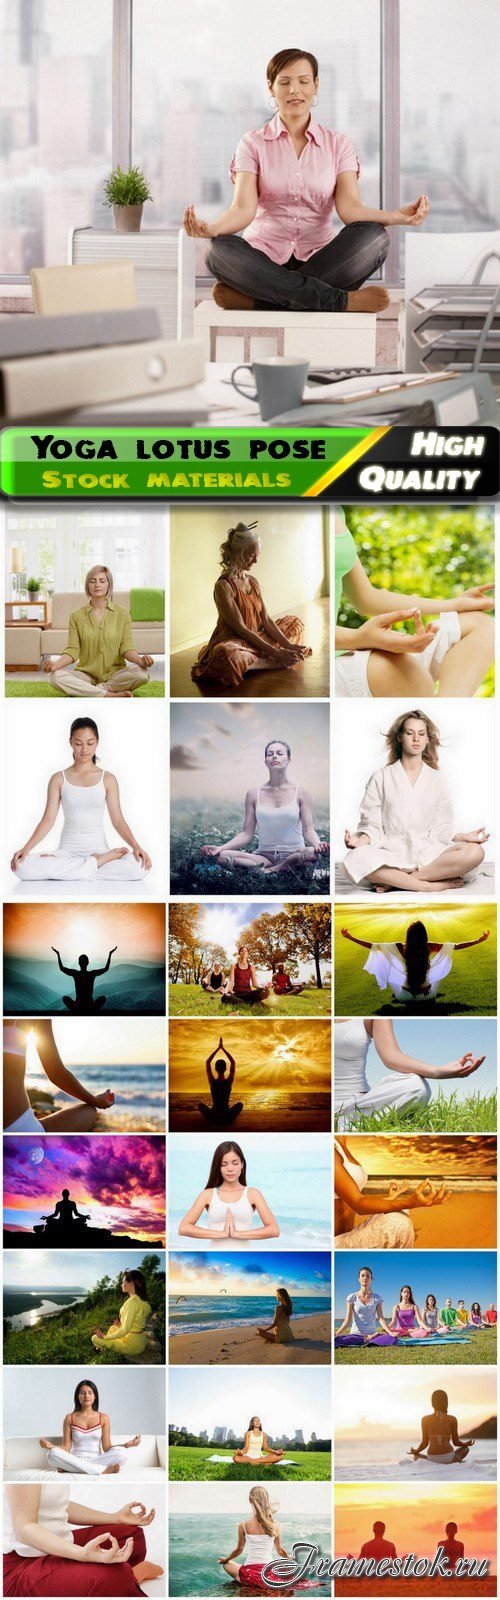 Yoga lotus pose and relaxation meditation freedom - 25 HQ Jpg